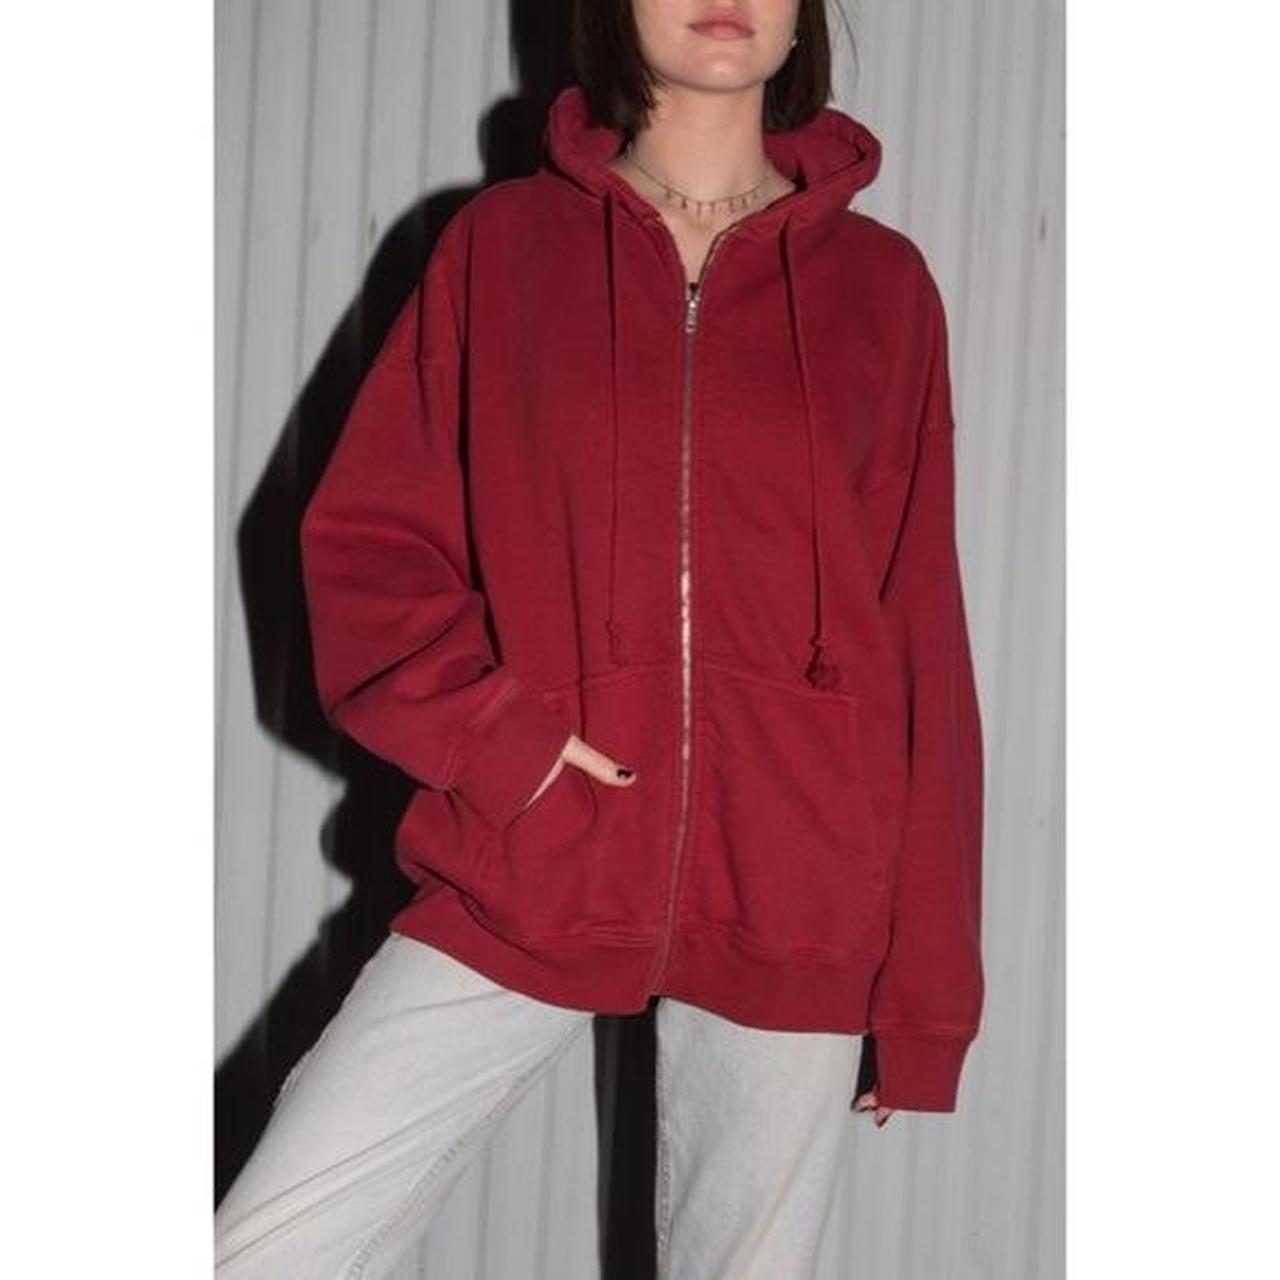 Brandy melville christy red oversized hoodie - Depop